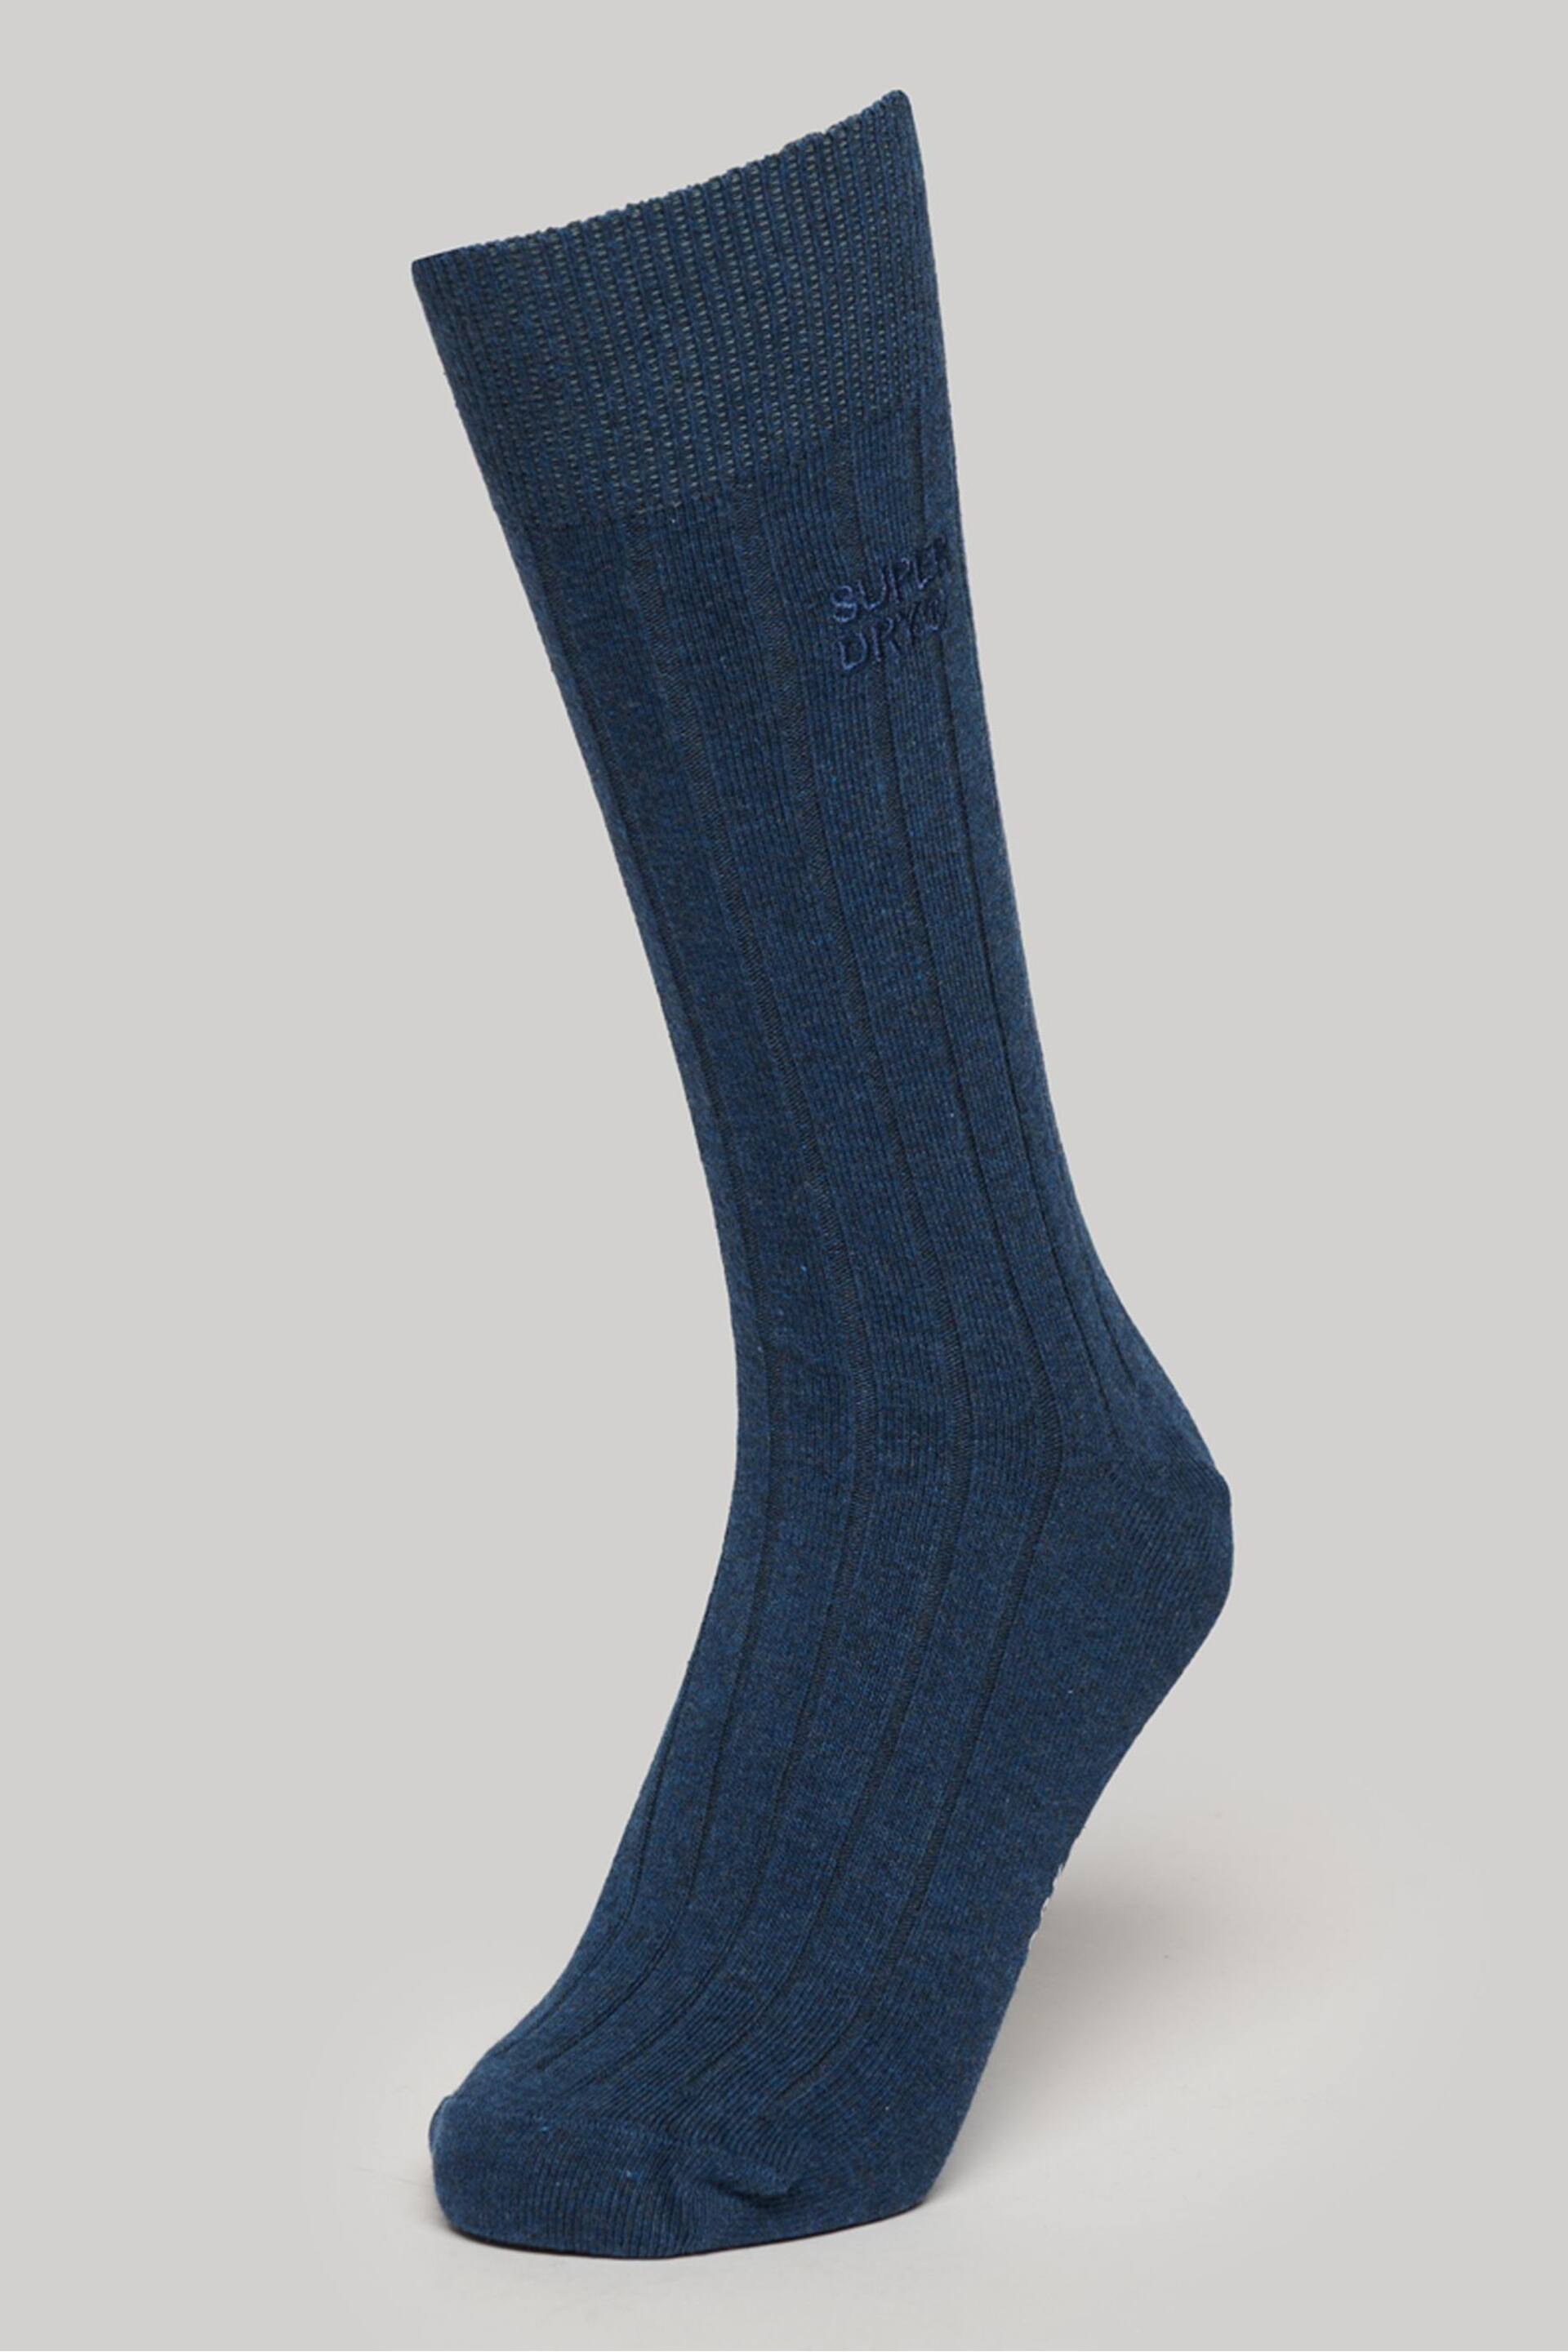 Superdry Blue Organic Cotton Unisex Core Rib Crew Socks 3 Pack - Image 4 of 5